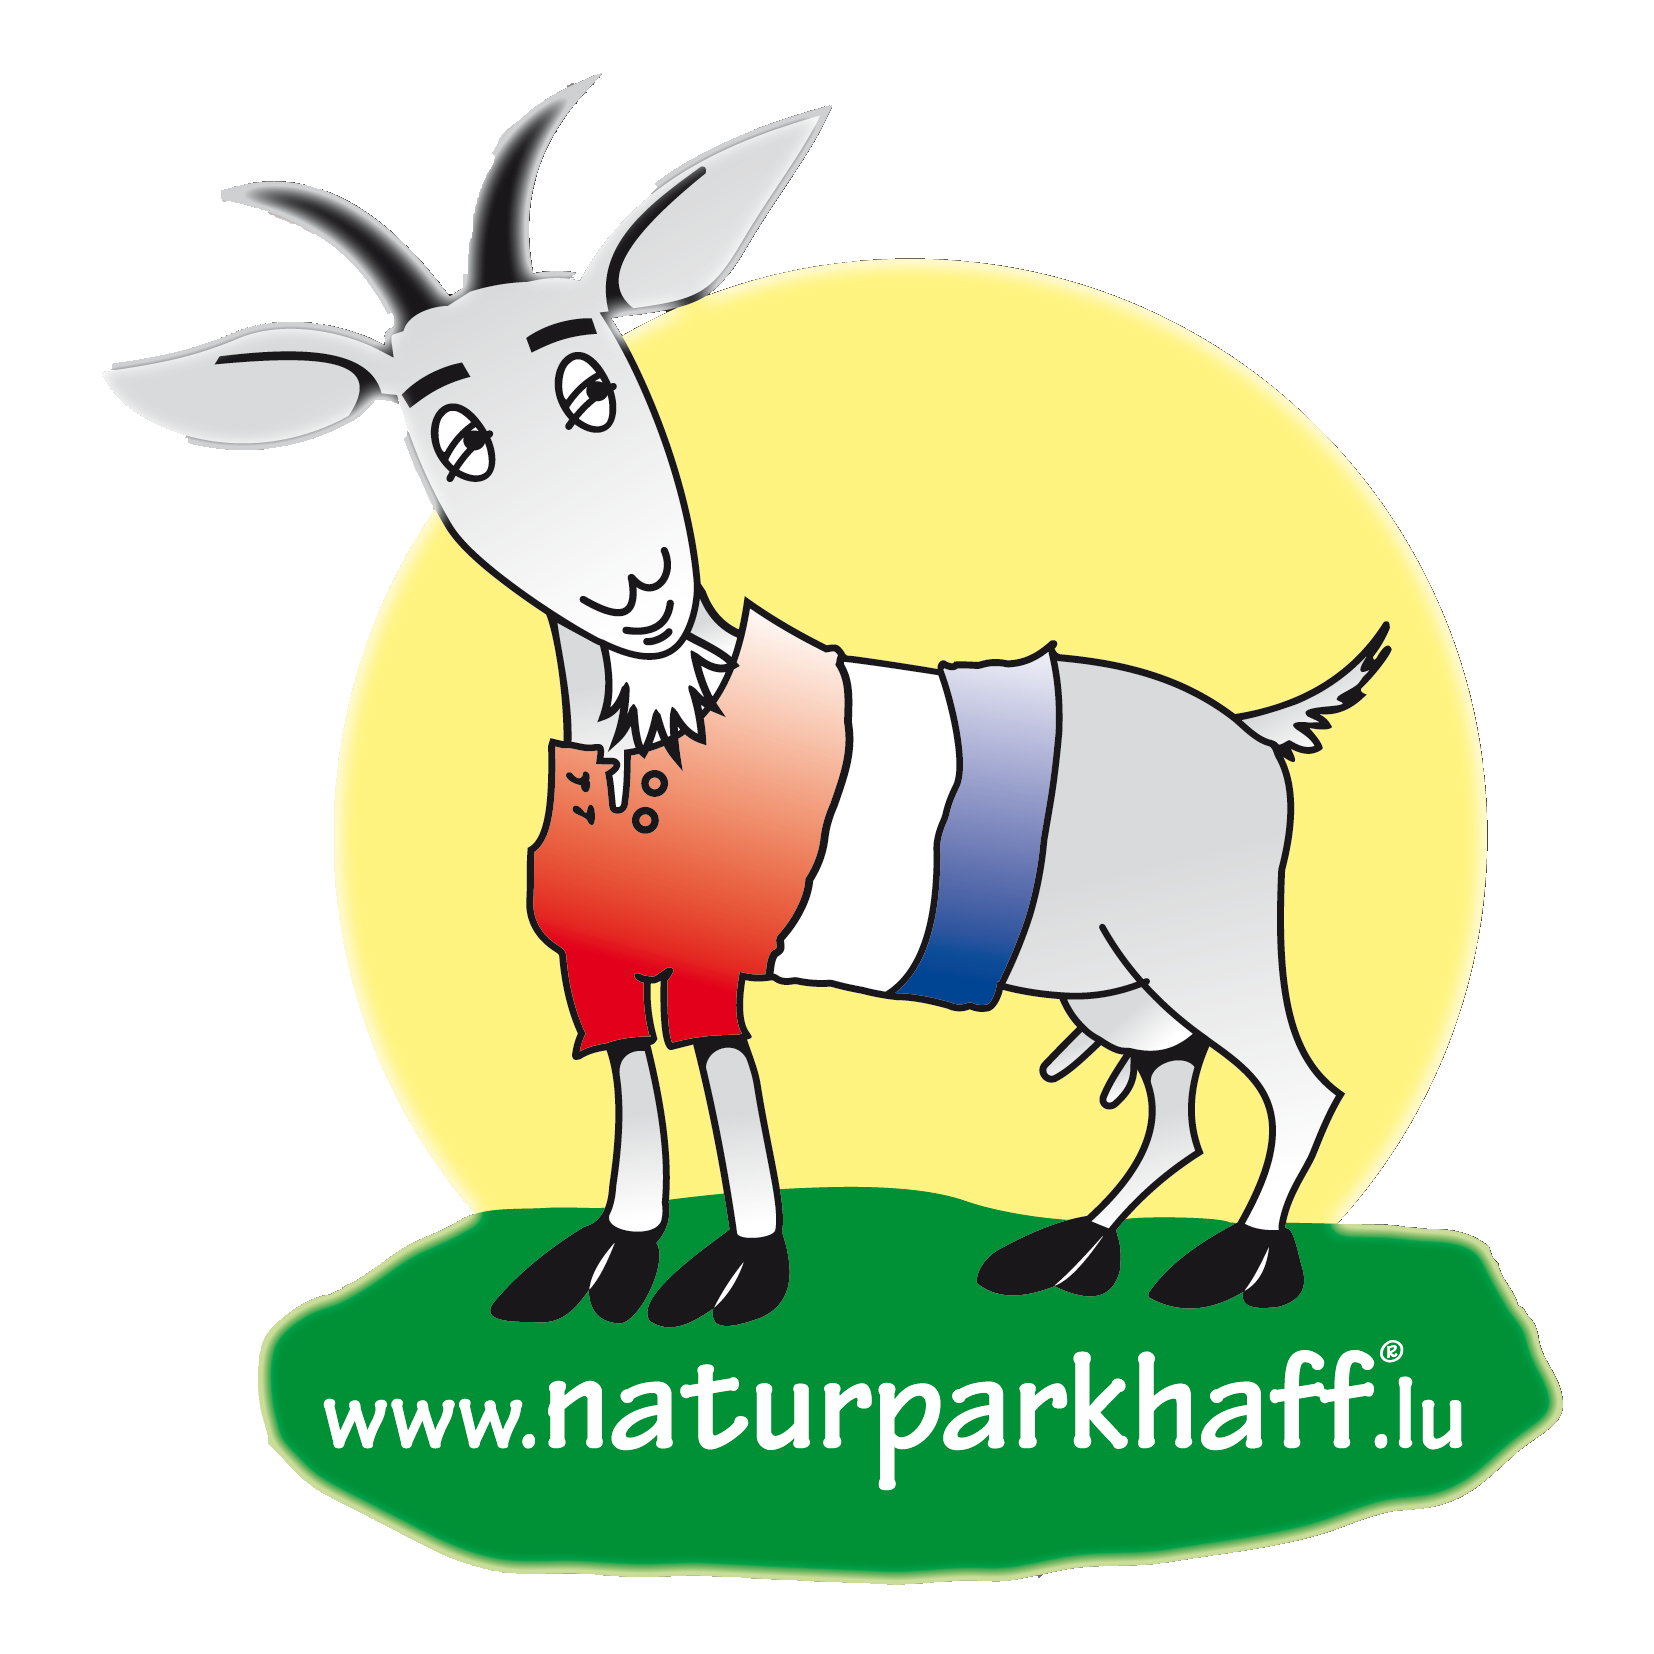 Naturparkhaff Logo